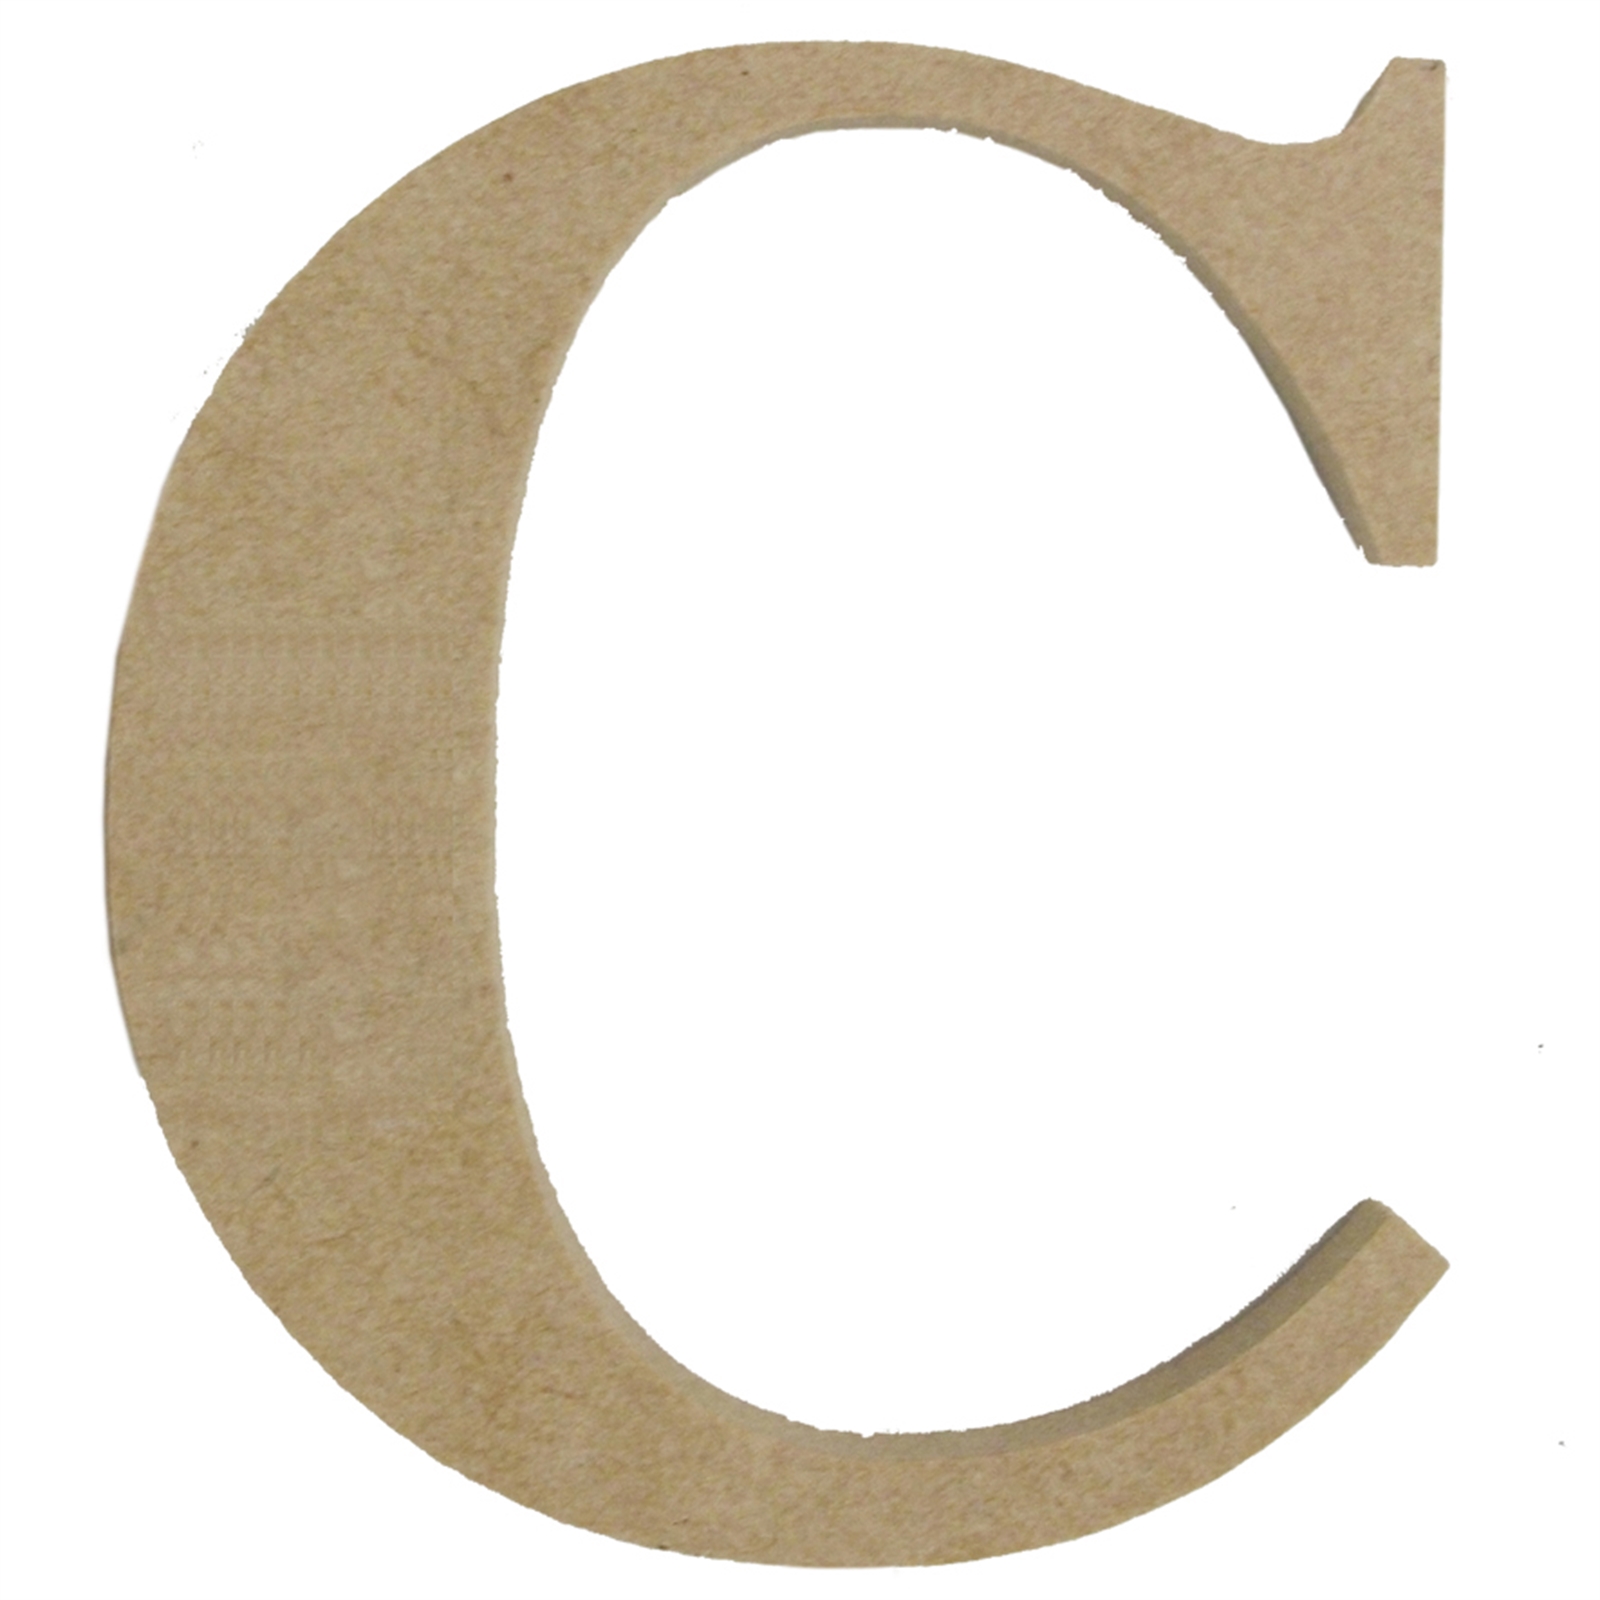 Boyle Large Craftwood Letter C